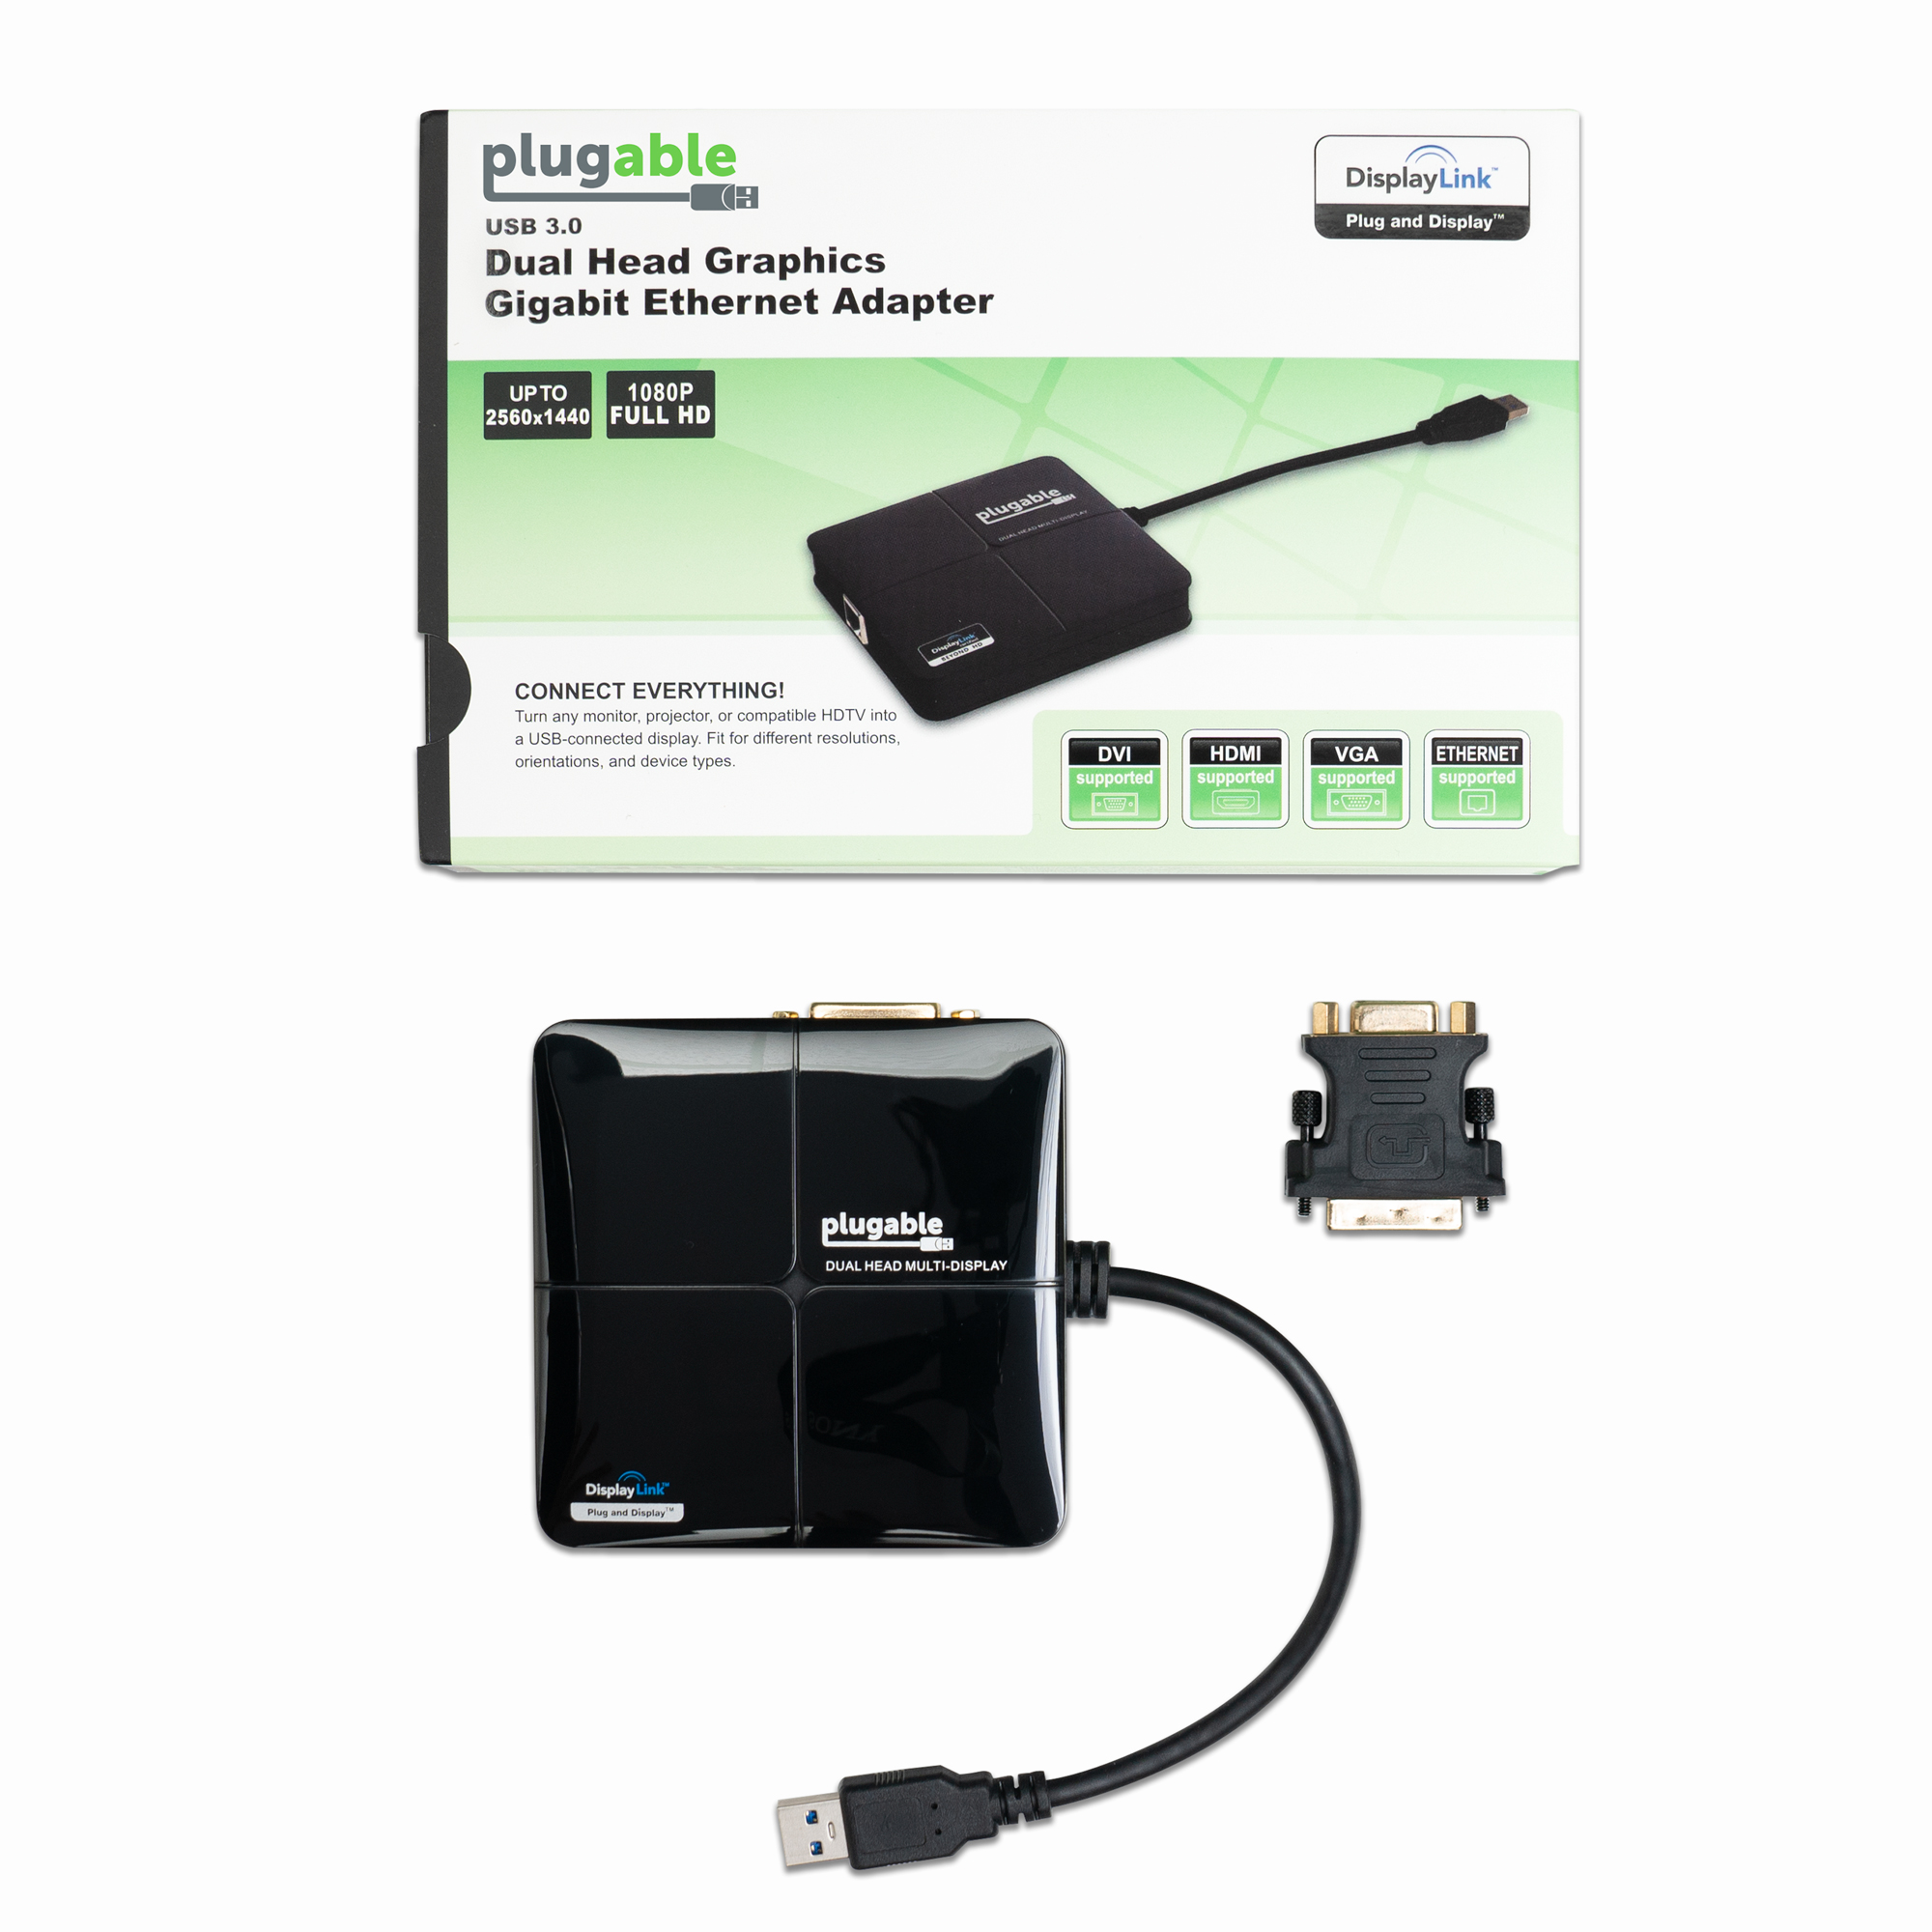 Plugable USB 3.0 Universal Mini Laptop Docking Station for Windows and Mac (Dual Video HDMI and DVI/VGA, Gigabit Ethernet) - image 4 of 5